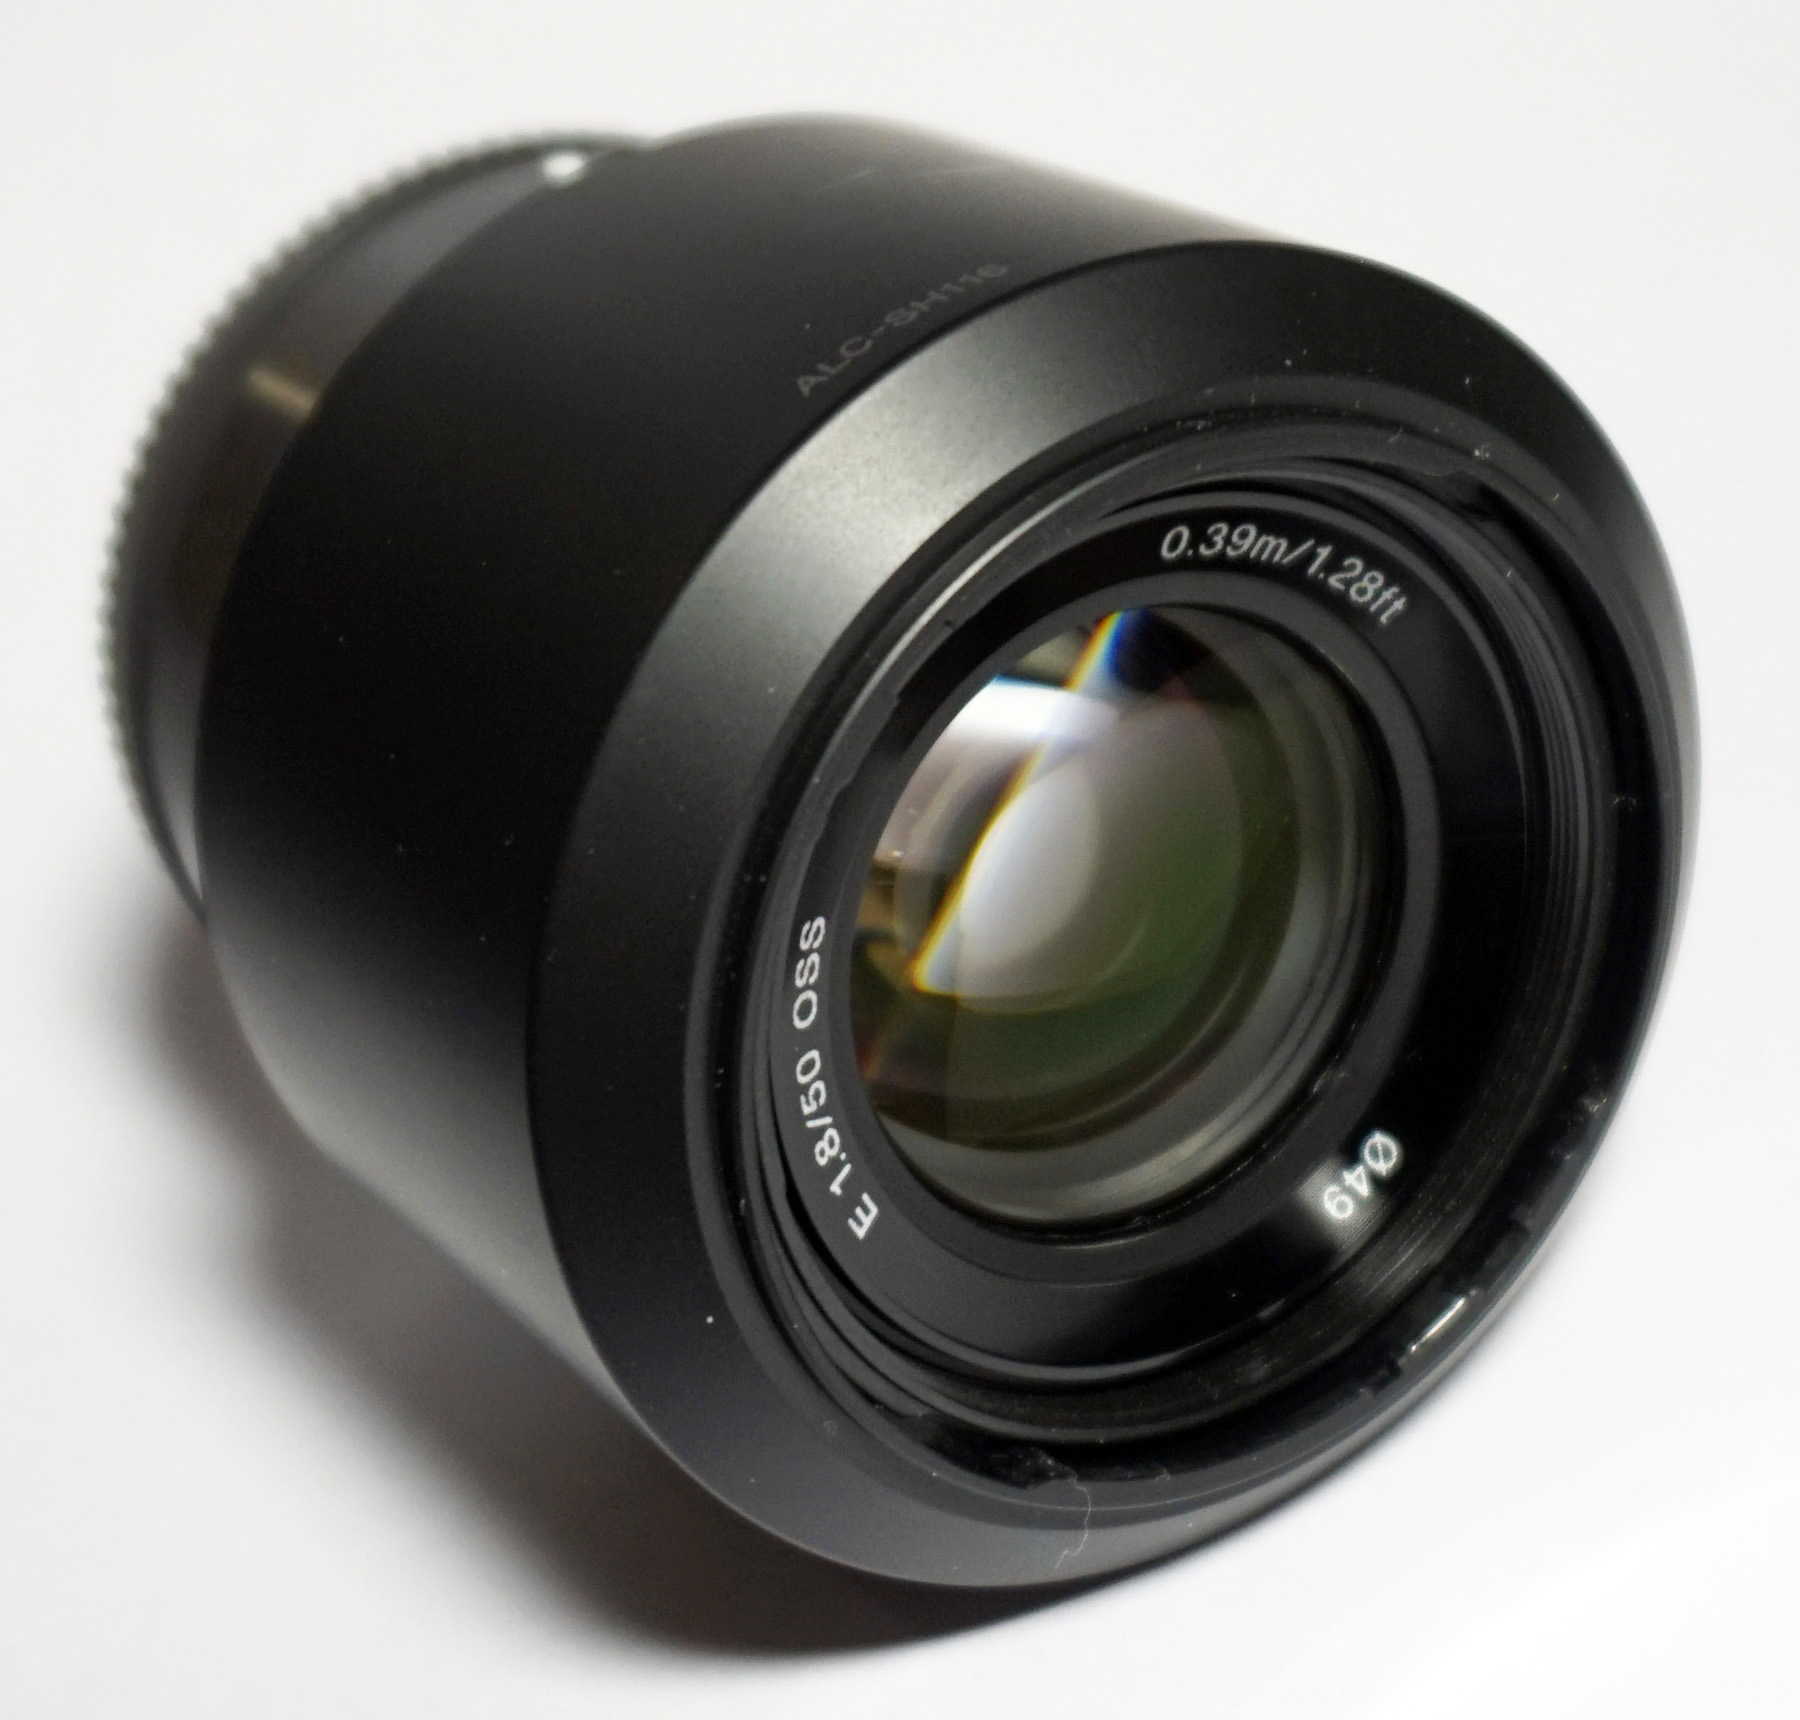 Sony E 50mm F1.8 OSS - Wikipedia